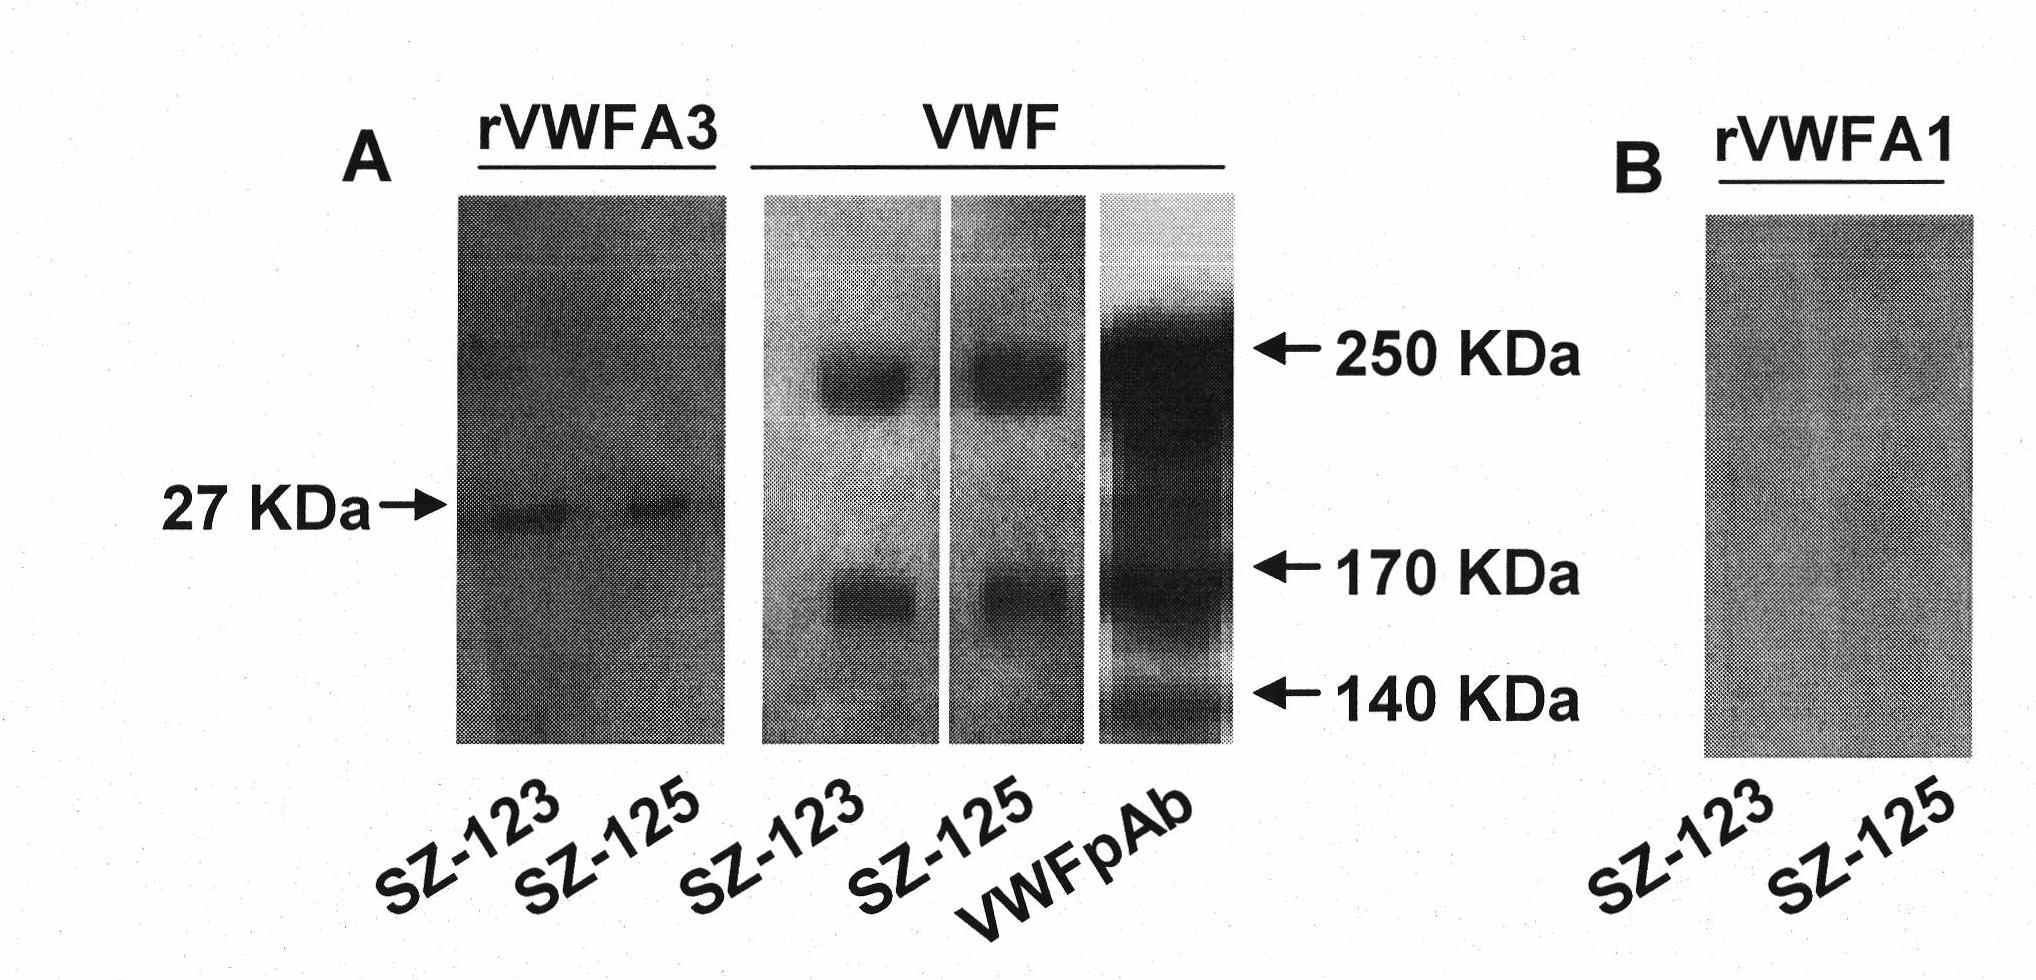 Bi-functional monoclonal antibody capable of anti-human von willbrand factor-A3